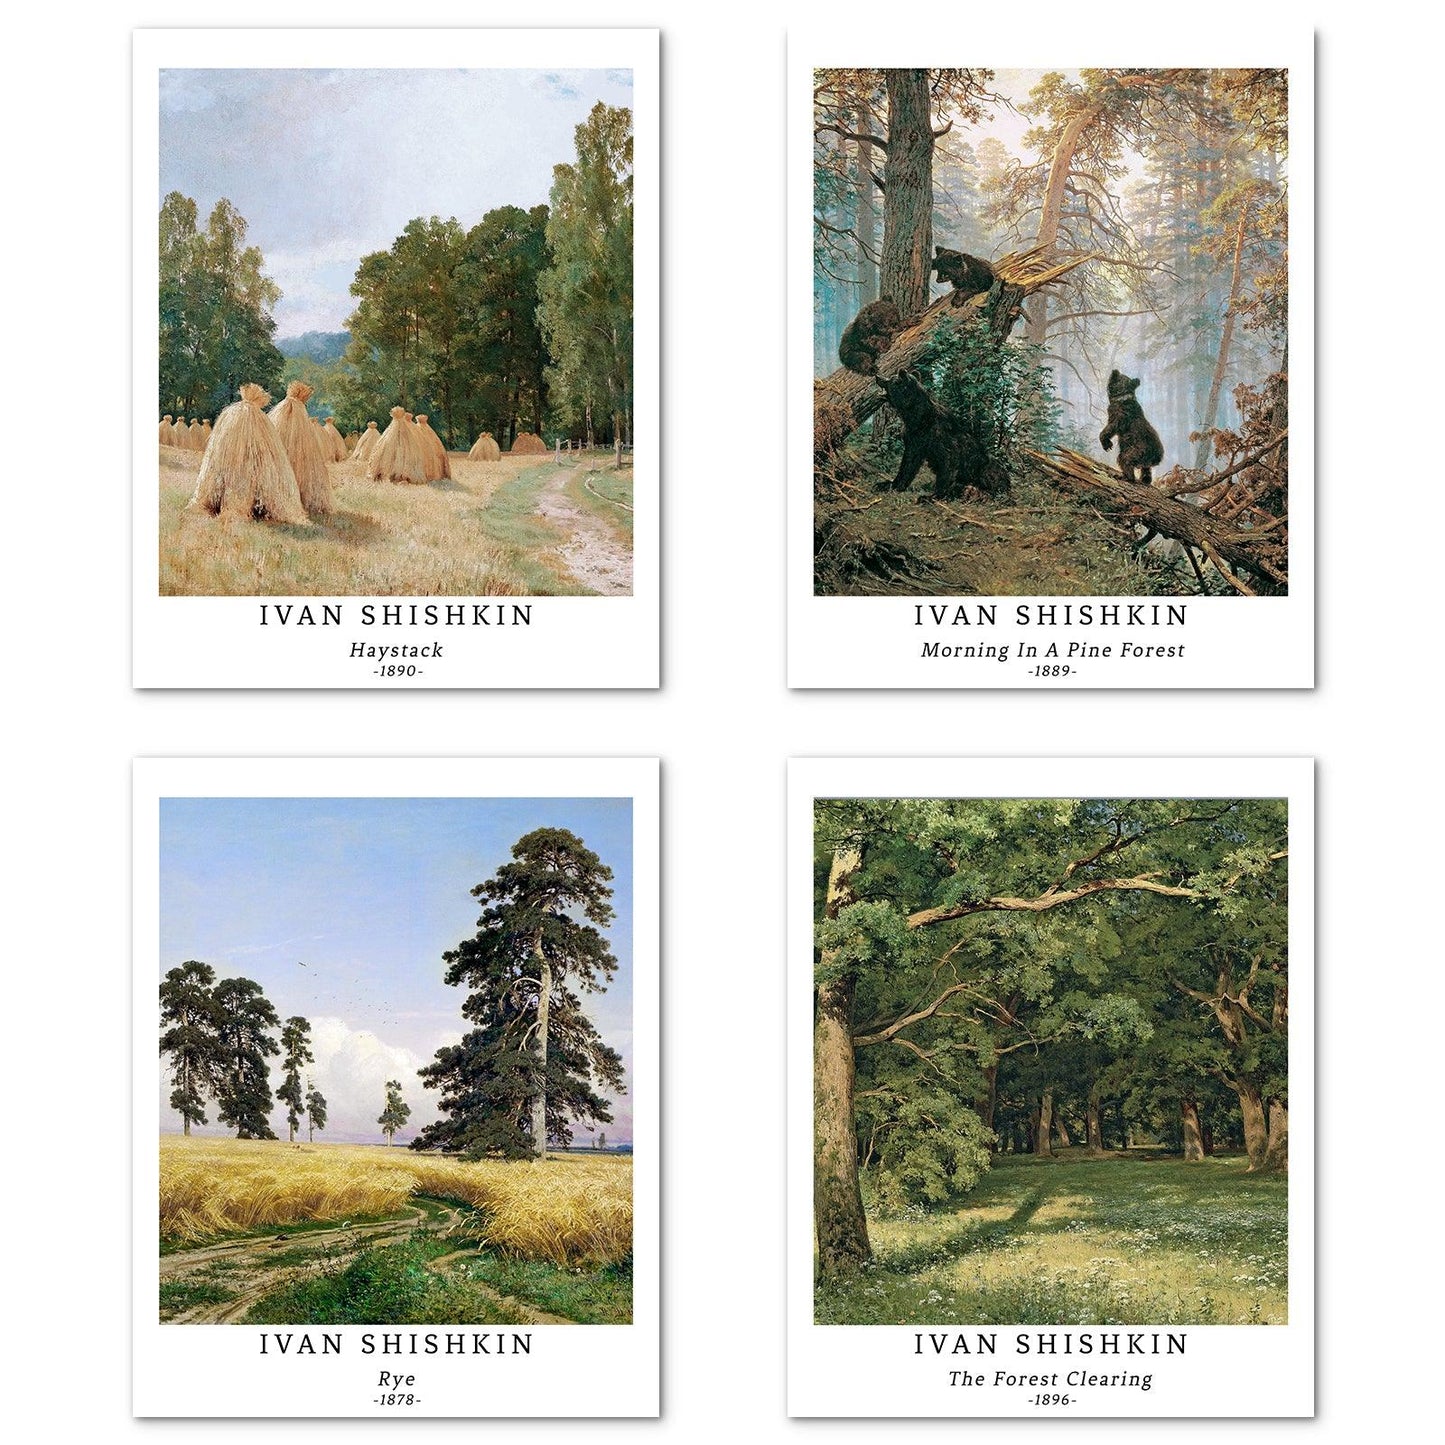 Classical Landscape Art Paper Giclee Prints Set of 4 (Ivan Shishkin Series) - Berkin Arts